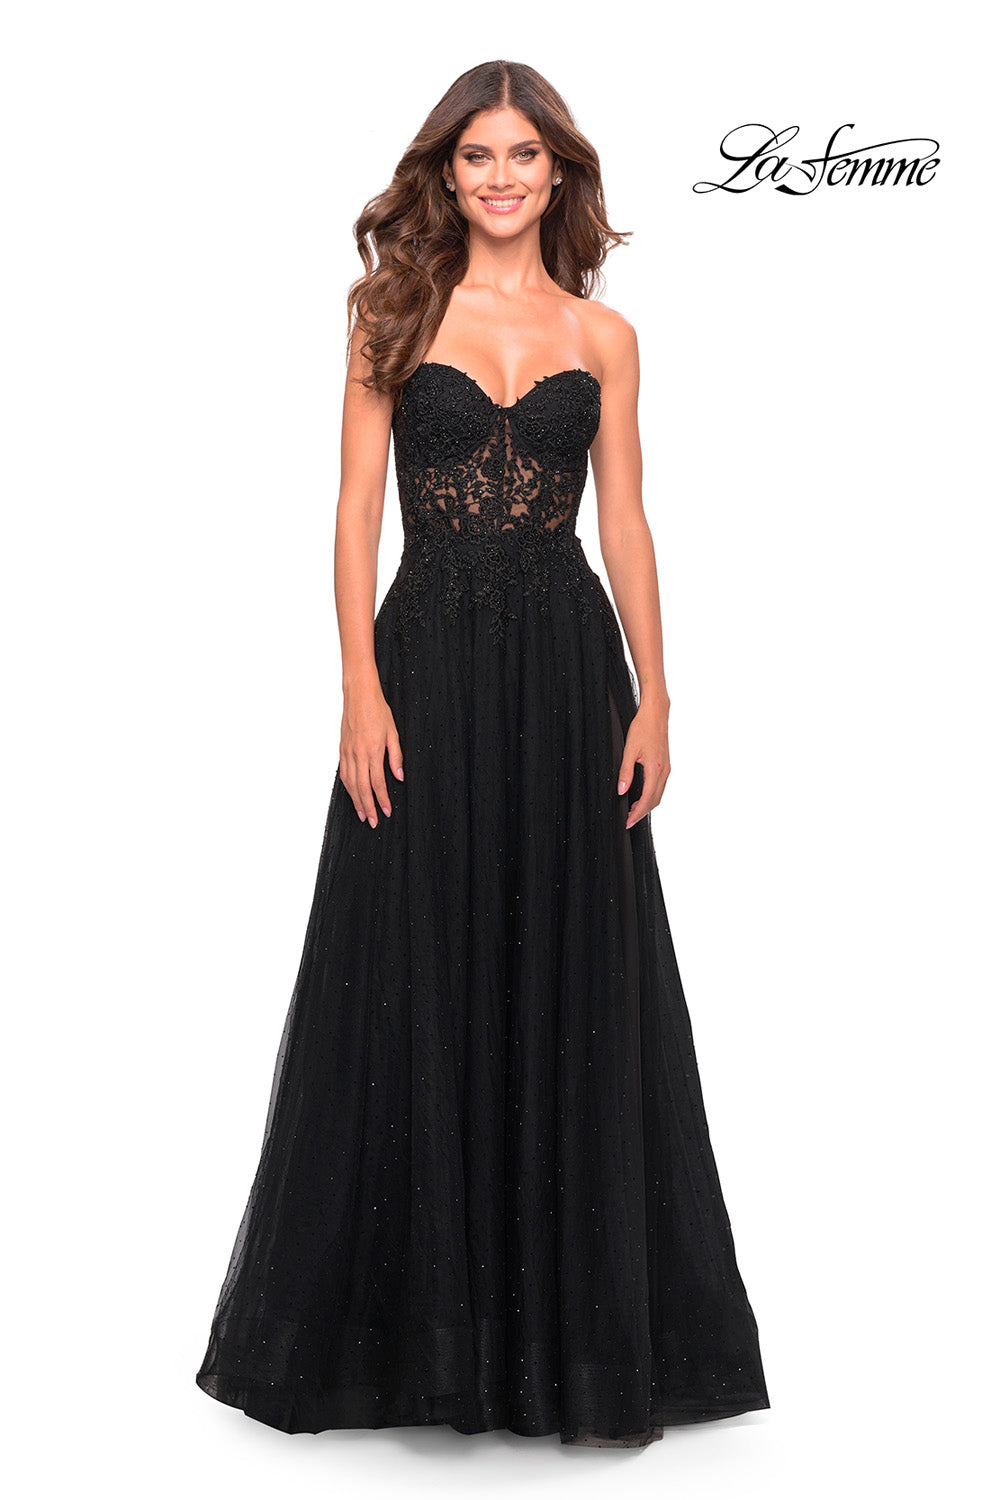 La Femme 31525 prom dress images.  La Femme 31525 is available in these colors: Black.